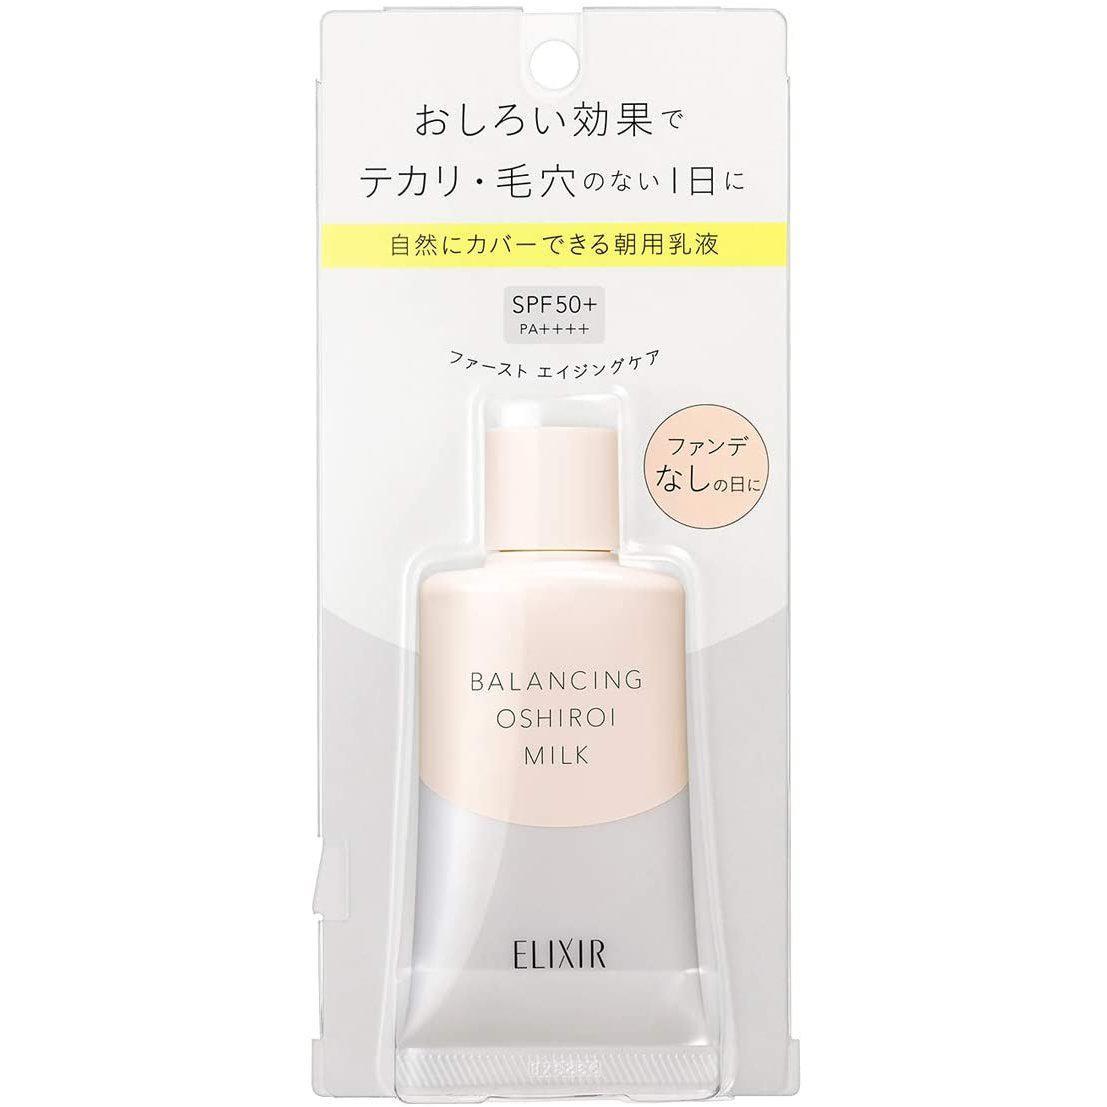 Shiseido Elixir Reflet Balancing Oshiroi Milk C SPF 50+ PA++++ 35g, Japanese Taste